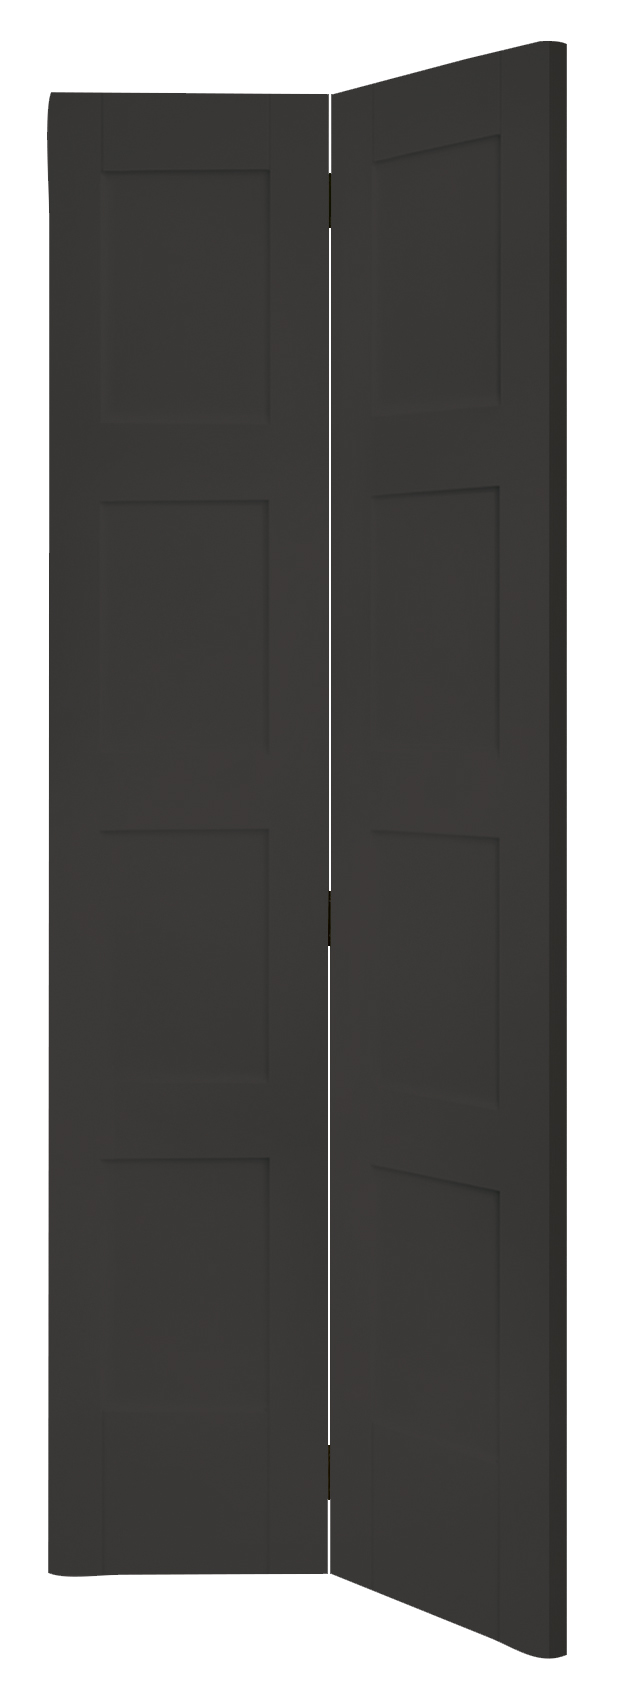 Shaker 4 Panel Bi-Fold Internal White Primed Door – Cosmos, 1981 x 686 x 35 mm